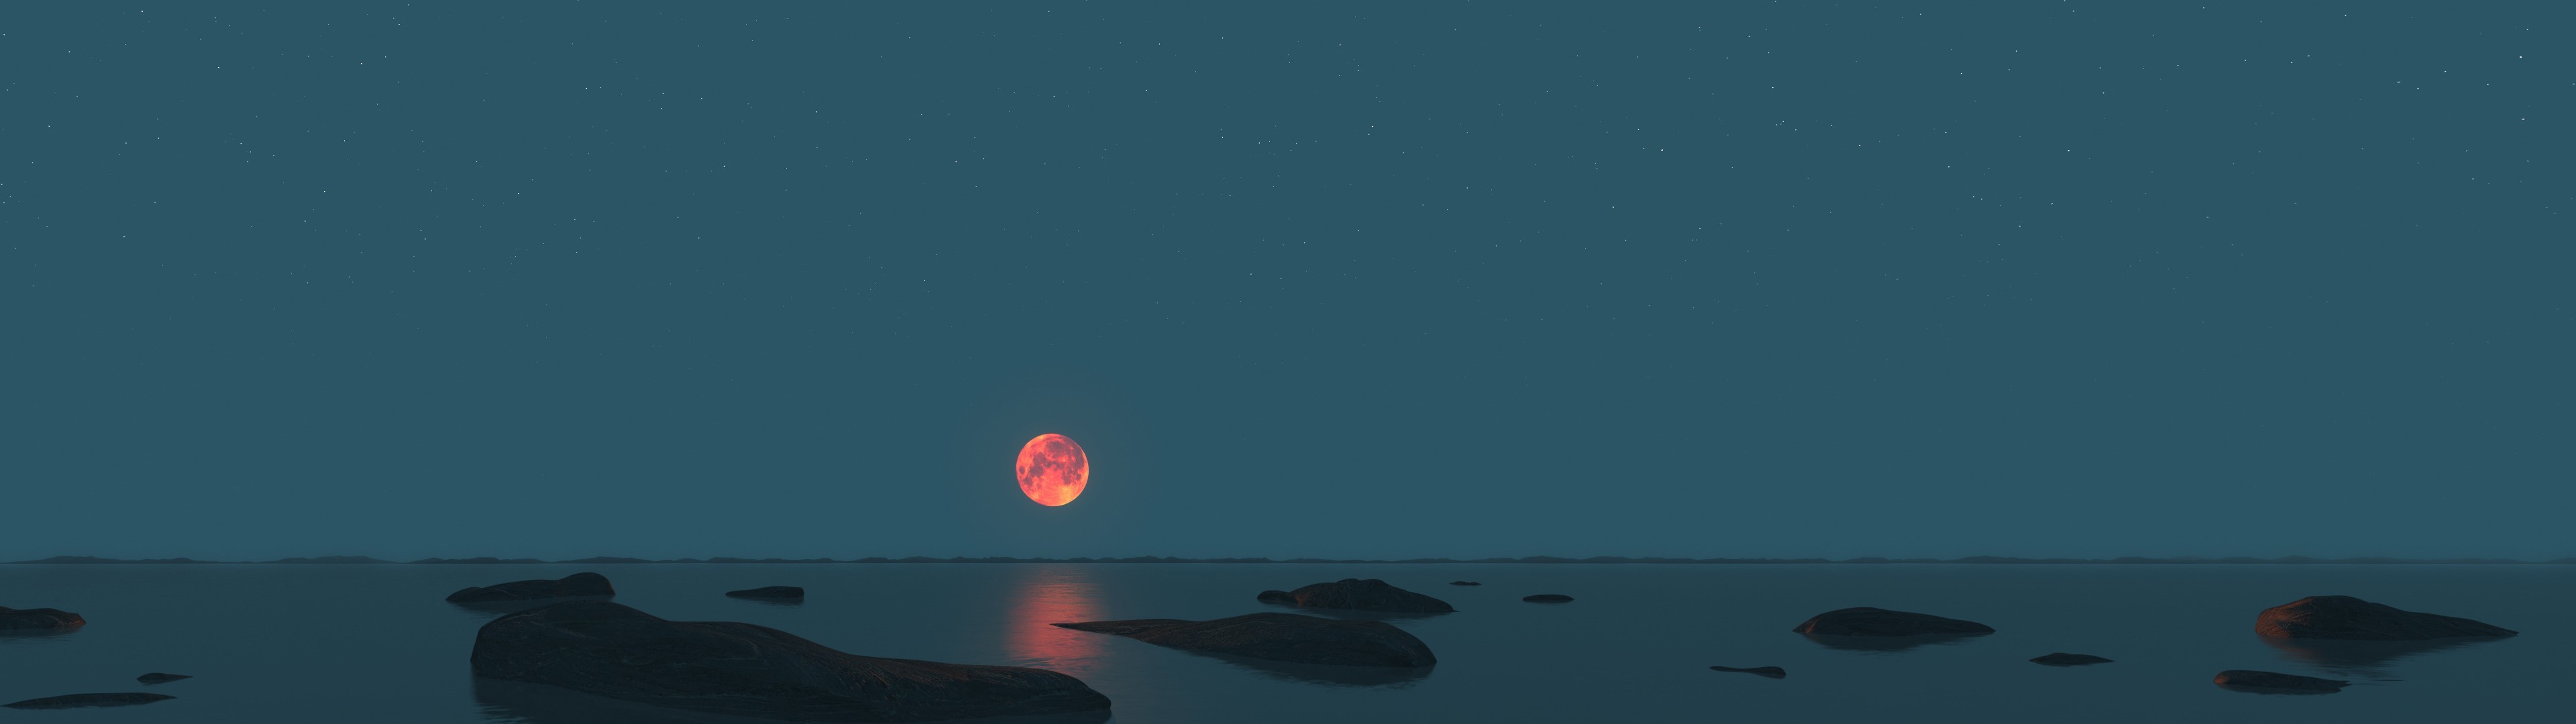 General 3840x1080 landscape sunset lake sea nature Moon night artwork digital art